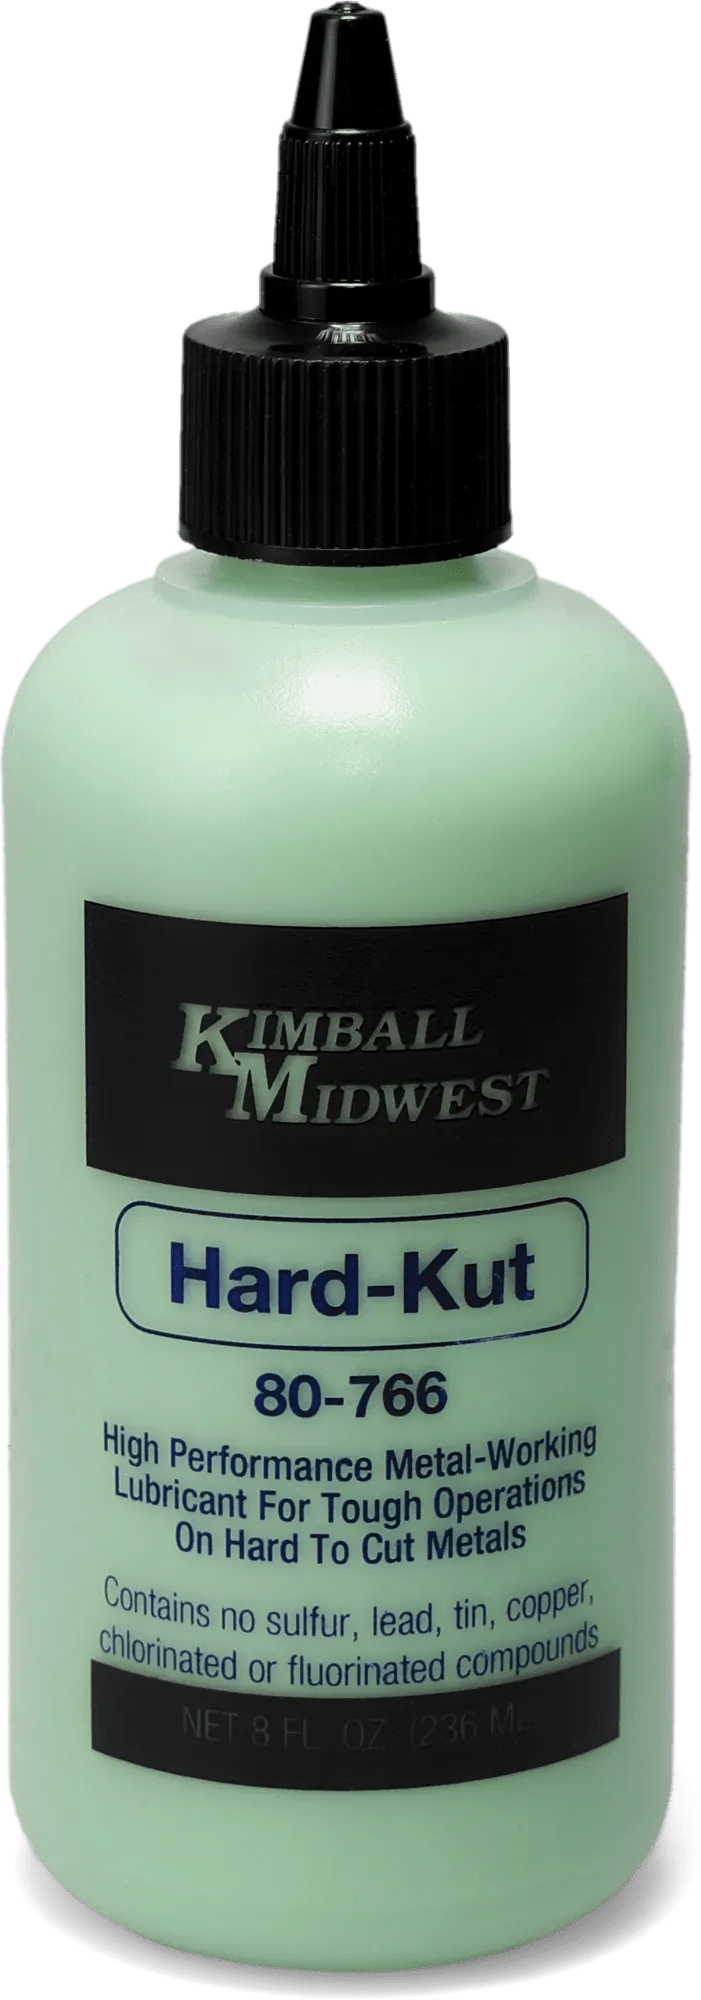 Hard-Kut Hi-Performance Metal-Working Lubricant - 8 oz. Bottle - Bulk